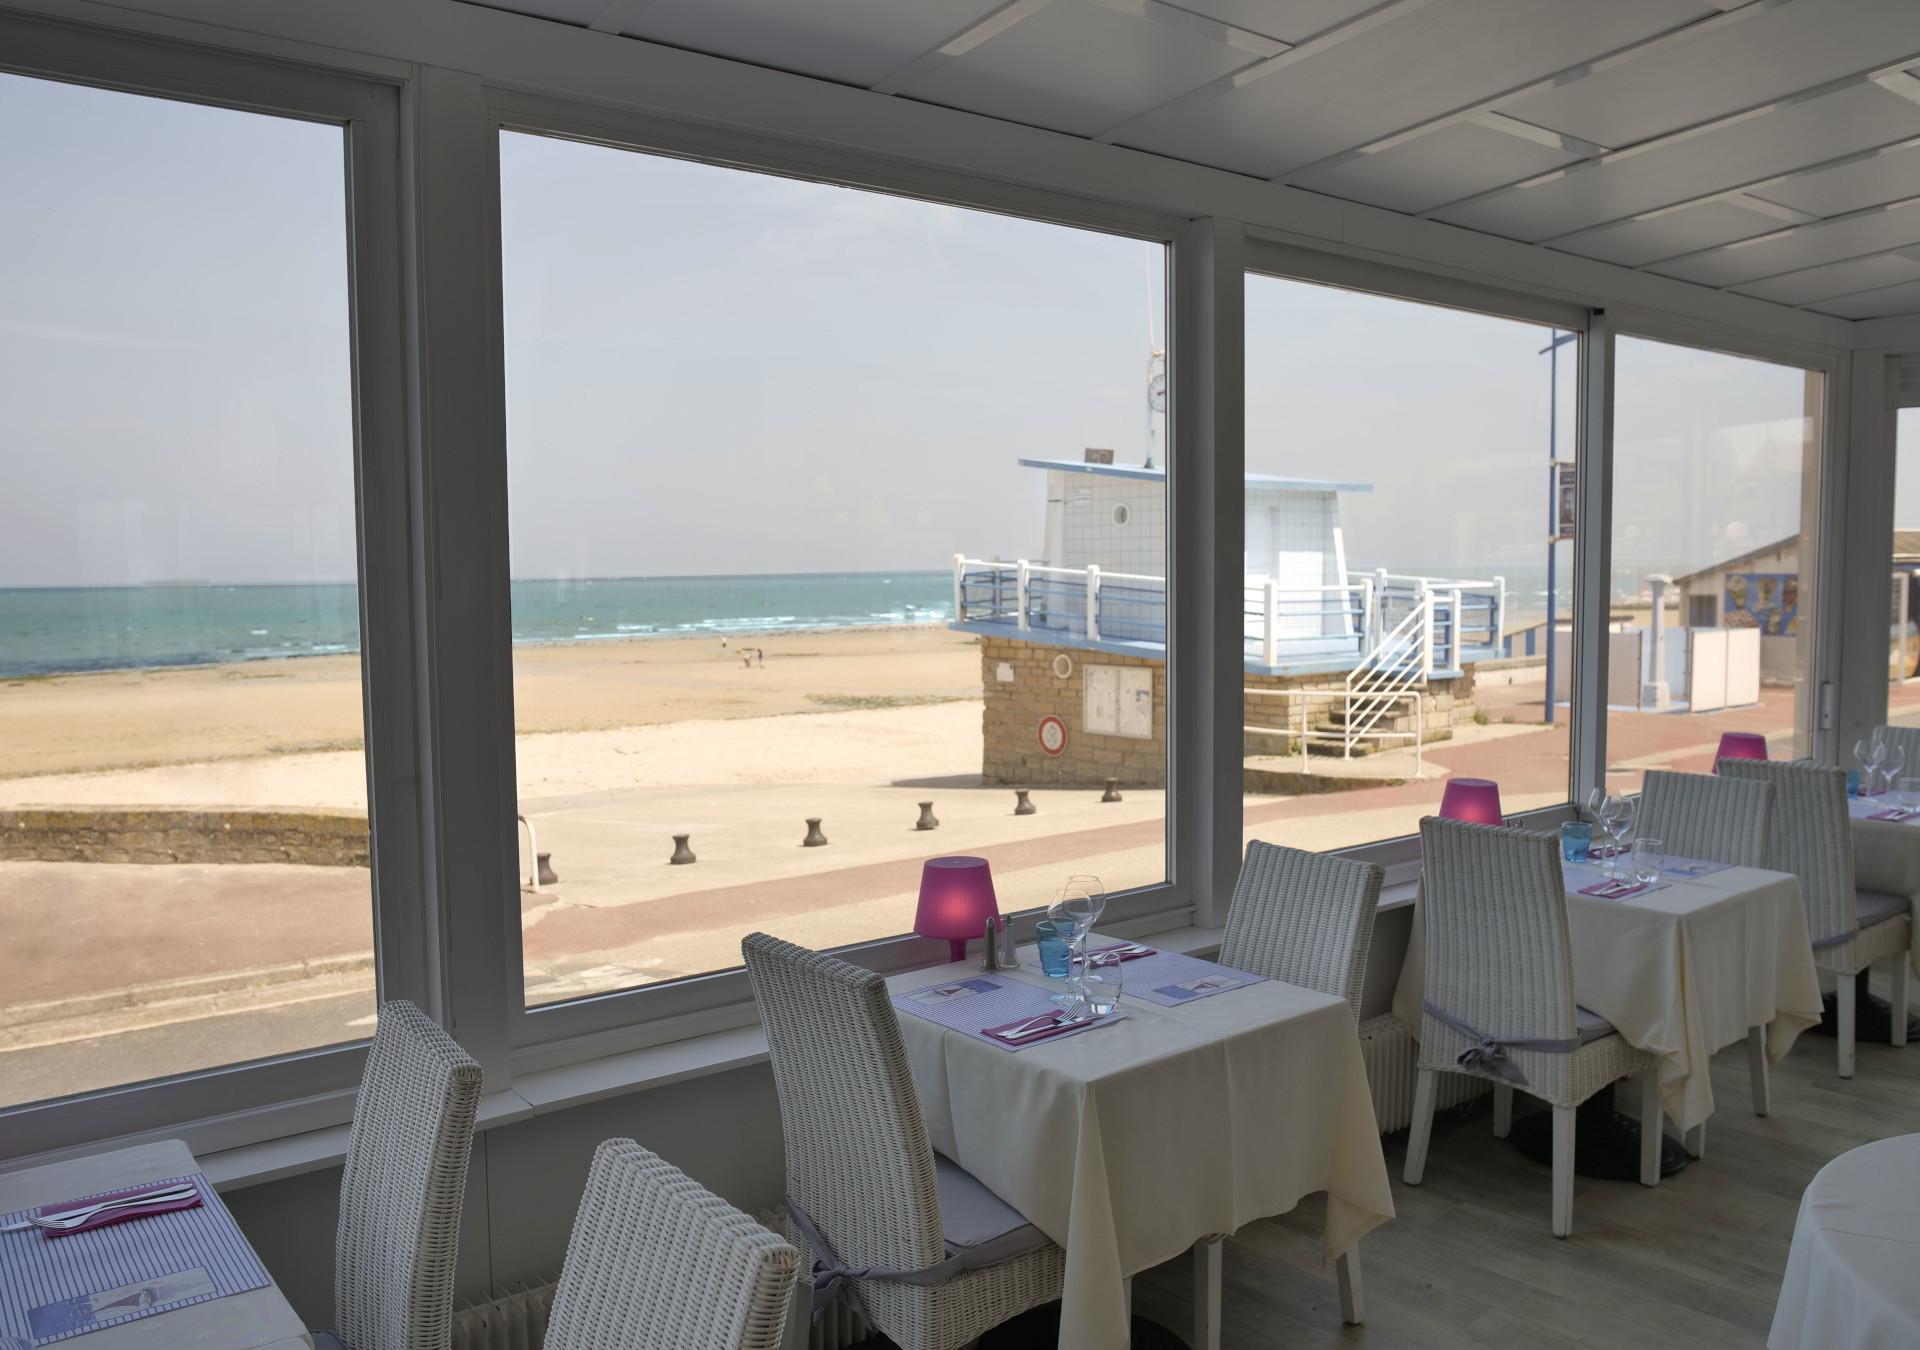 Restaurant avec vue sur la Mer - Hôtel Restaurant de la Mer